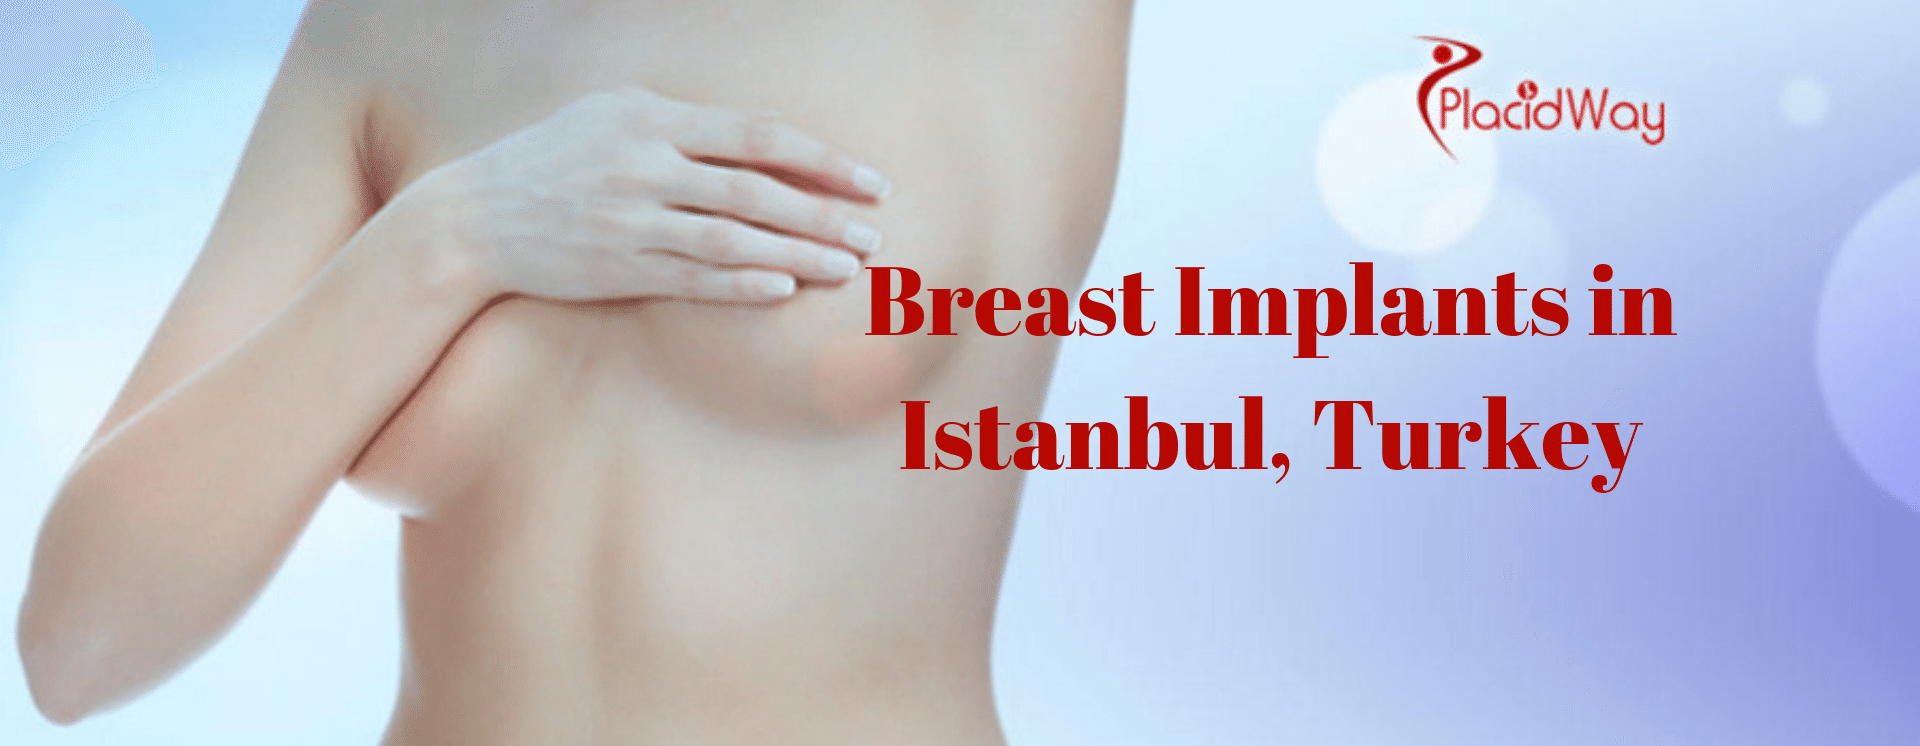 Breast Implants in Istanbul, Turkey